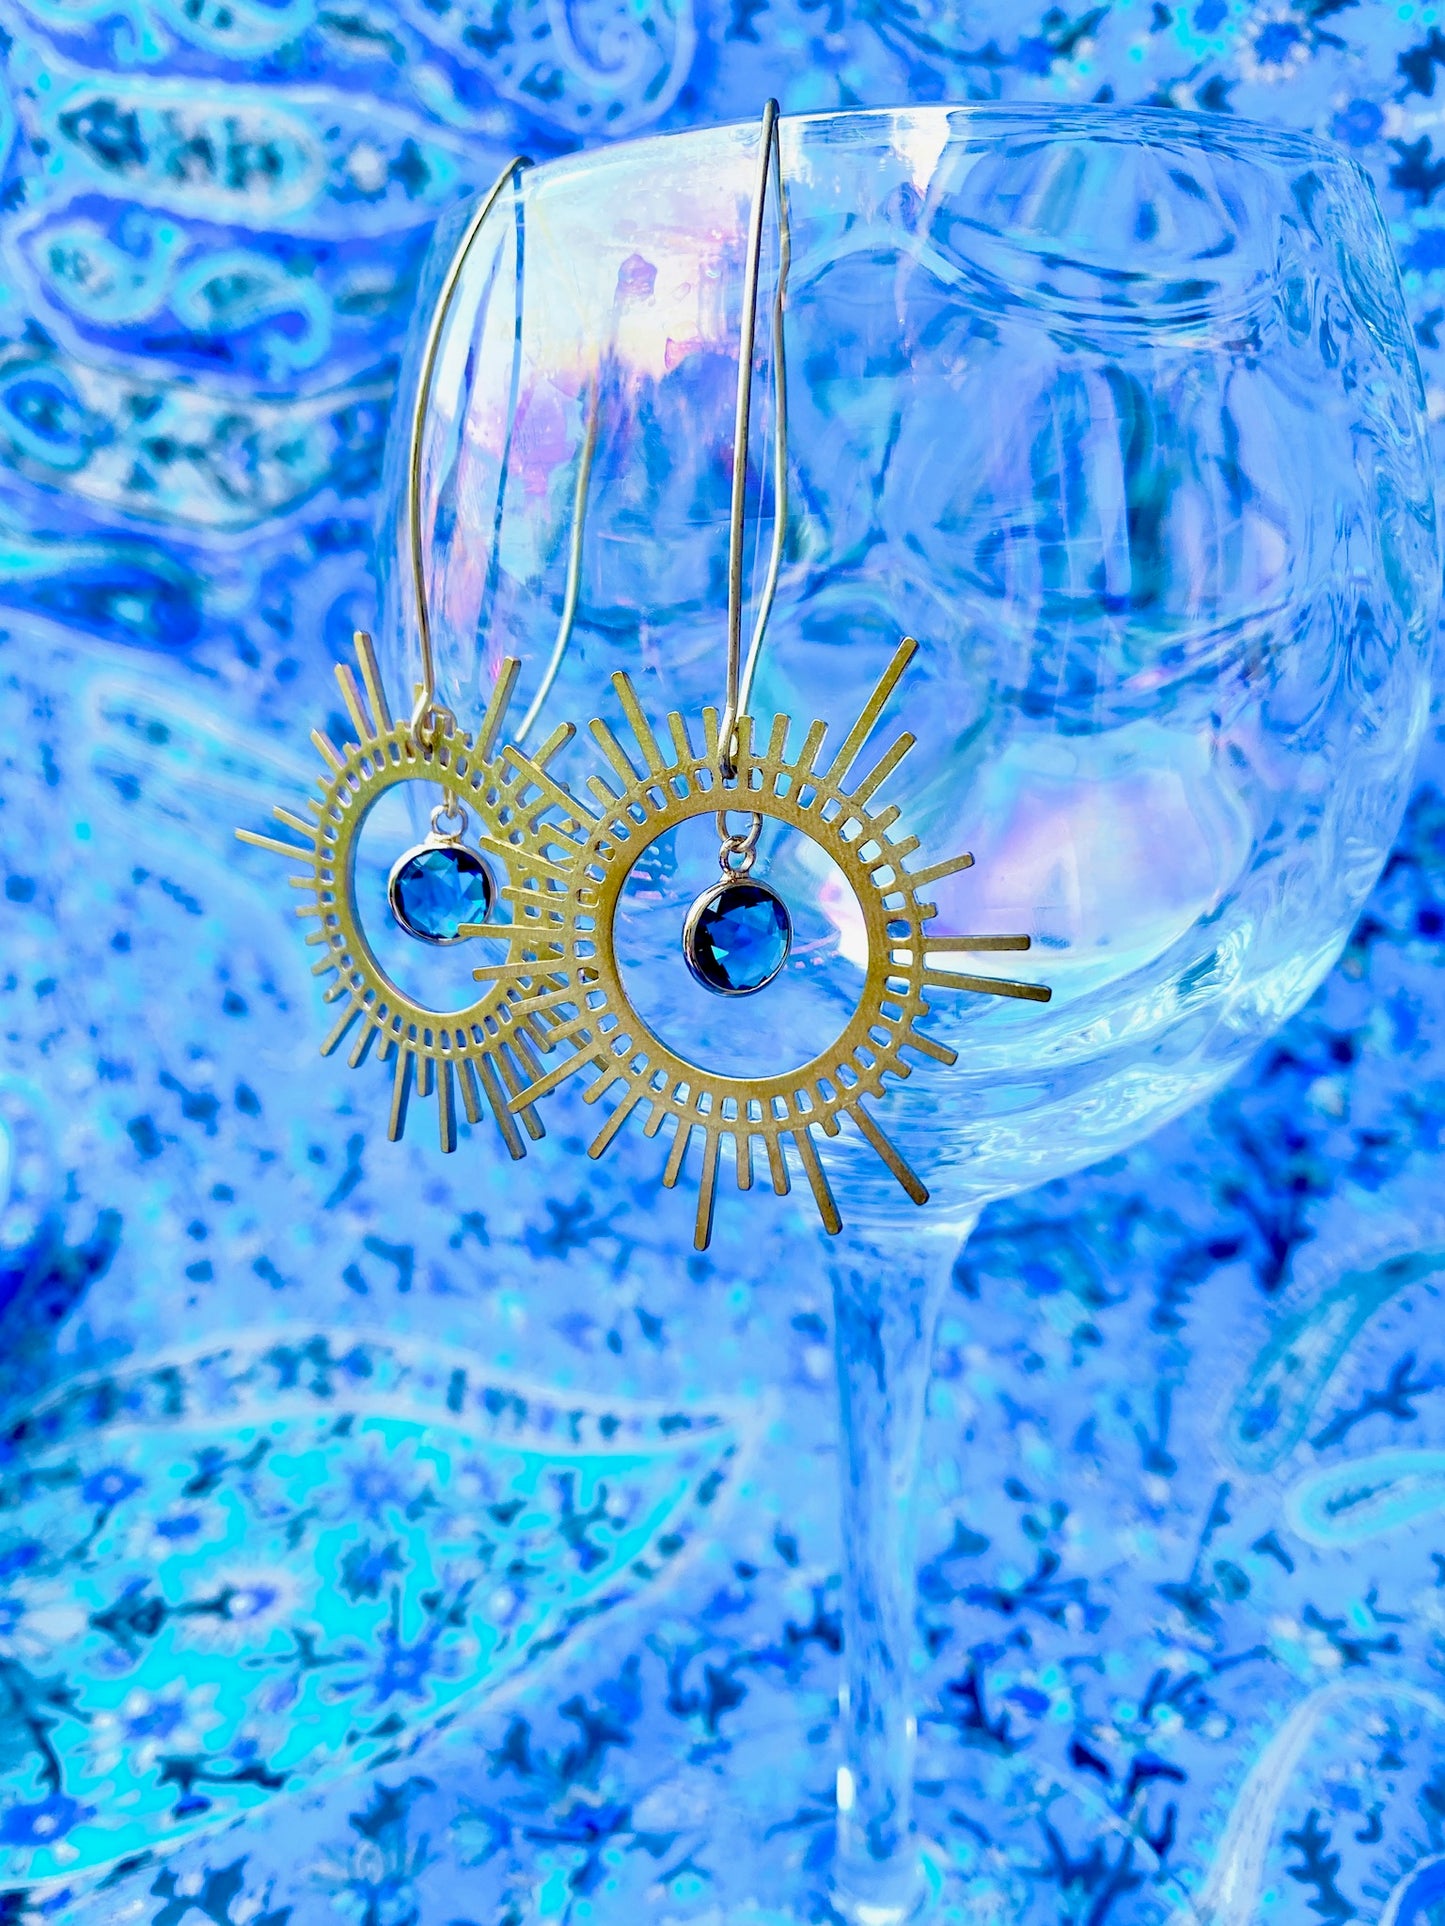 Brass Sunburst Earrings in Peacock Blue